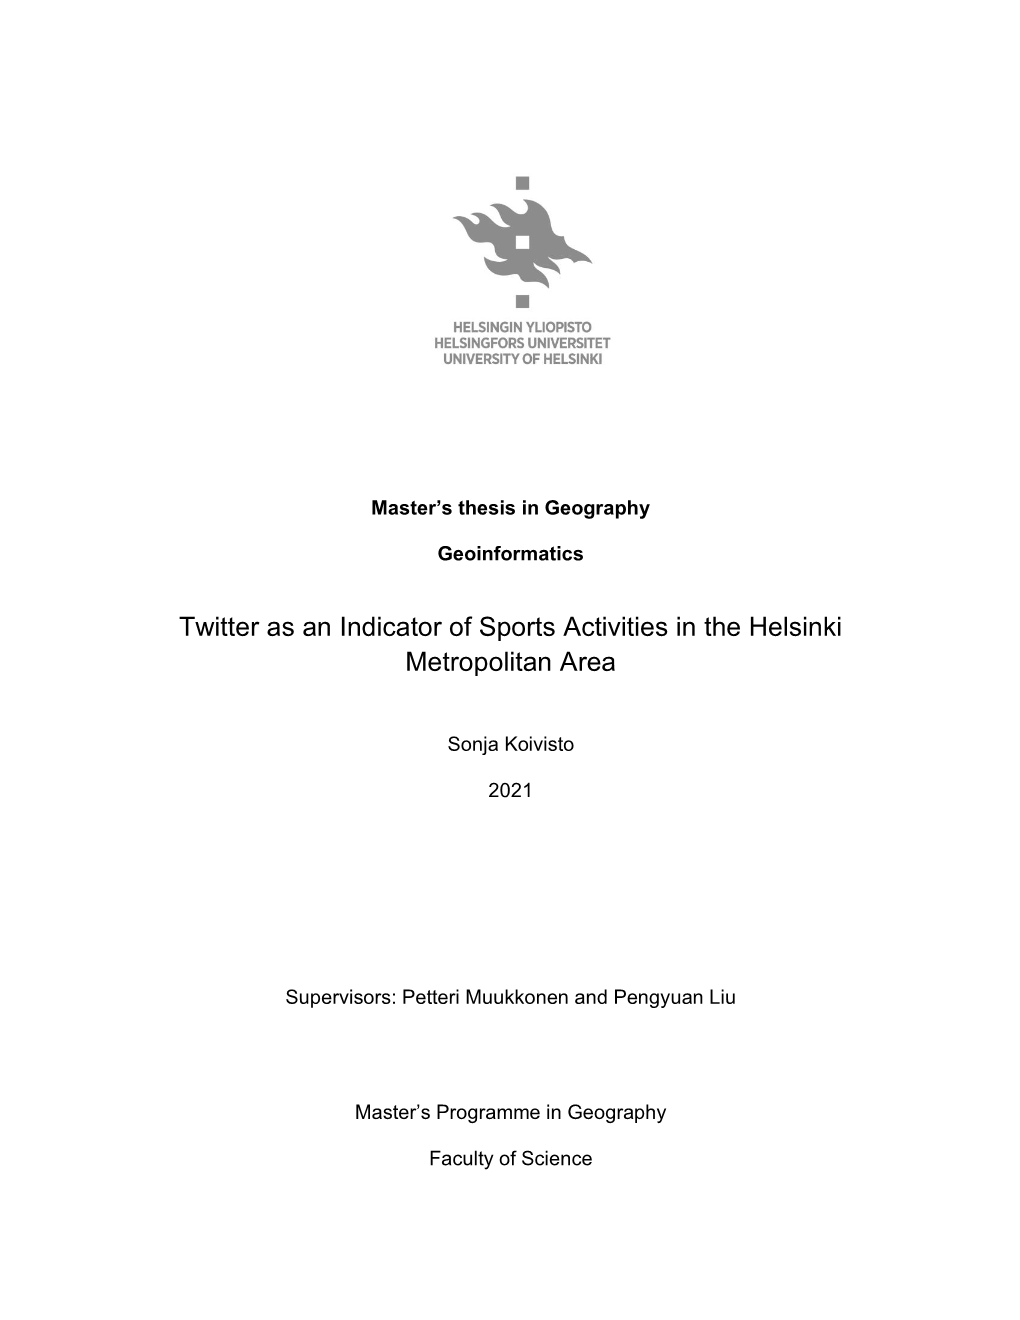 Twitter As an Indicator of Sports Activities in the Helsinki Metropolitan Area